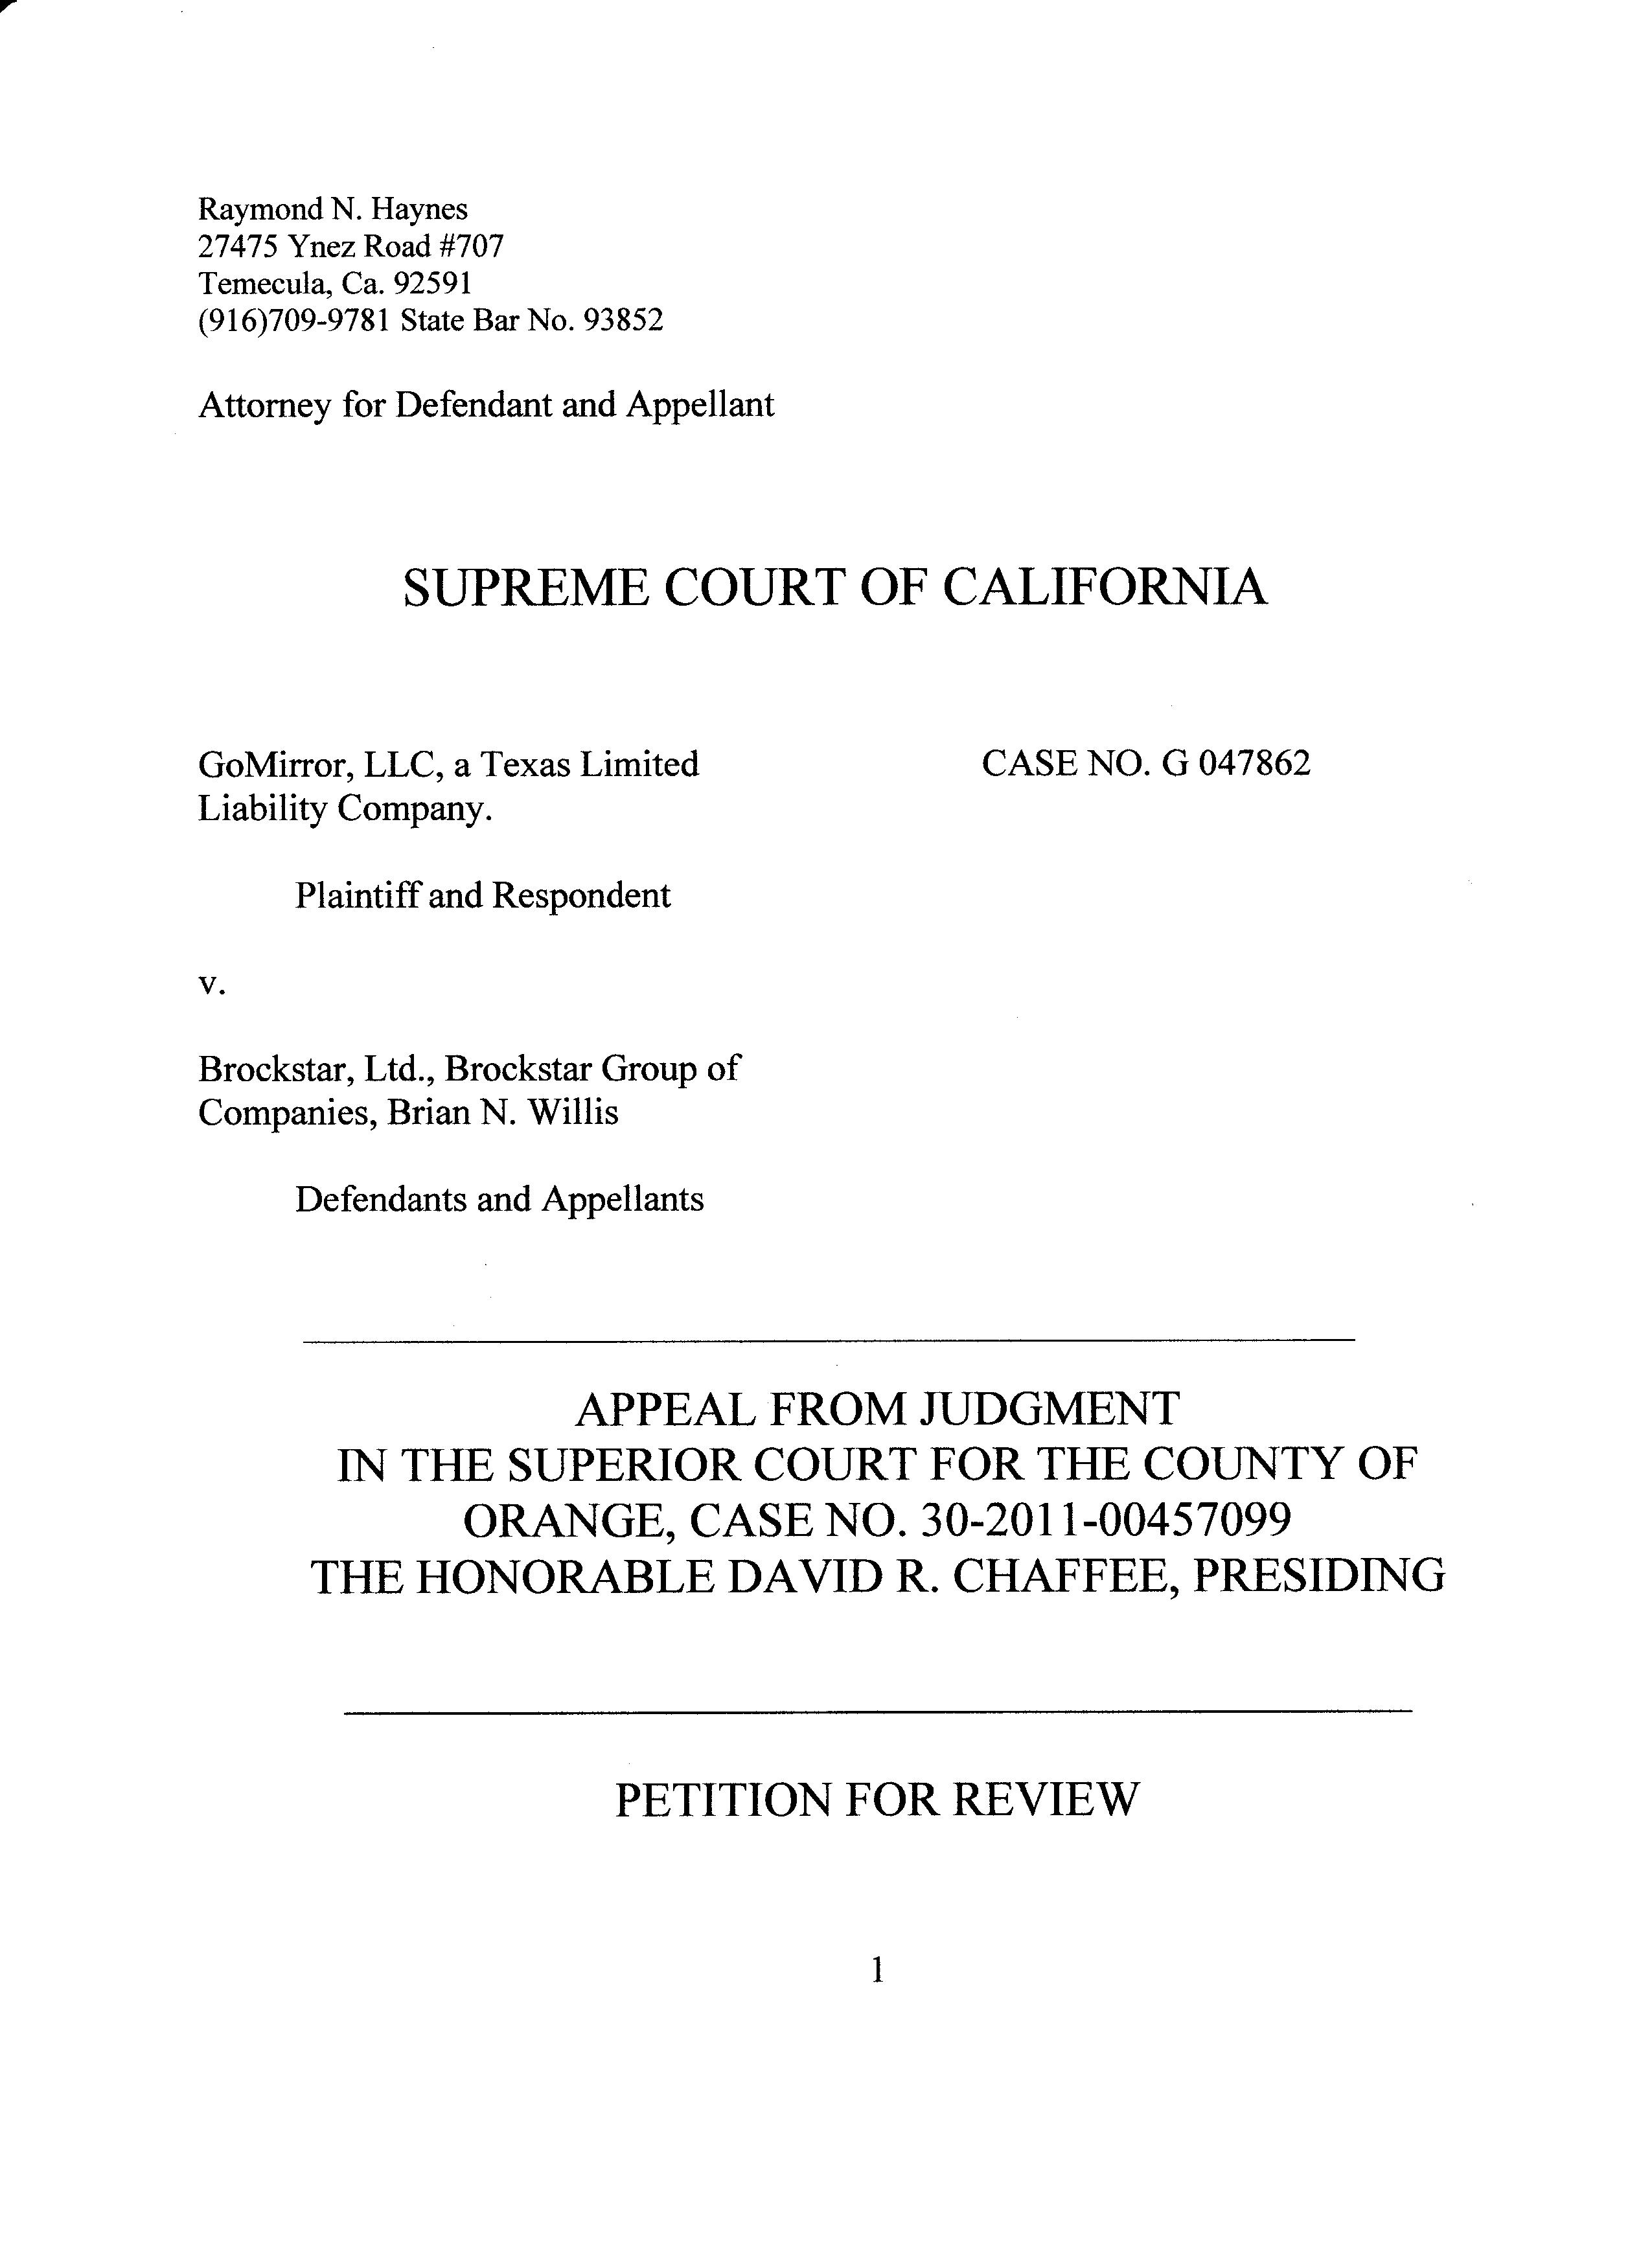 STATE OF CALIFORNIA SUPREME COURT PETITION BROCKSTAR VS GOMIRROR, LLC PROOF